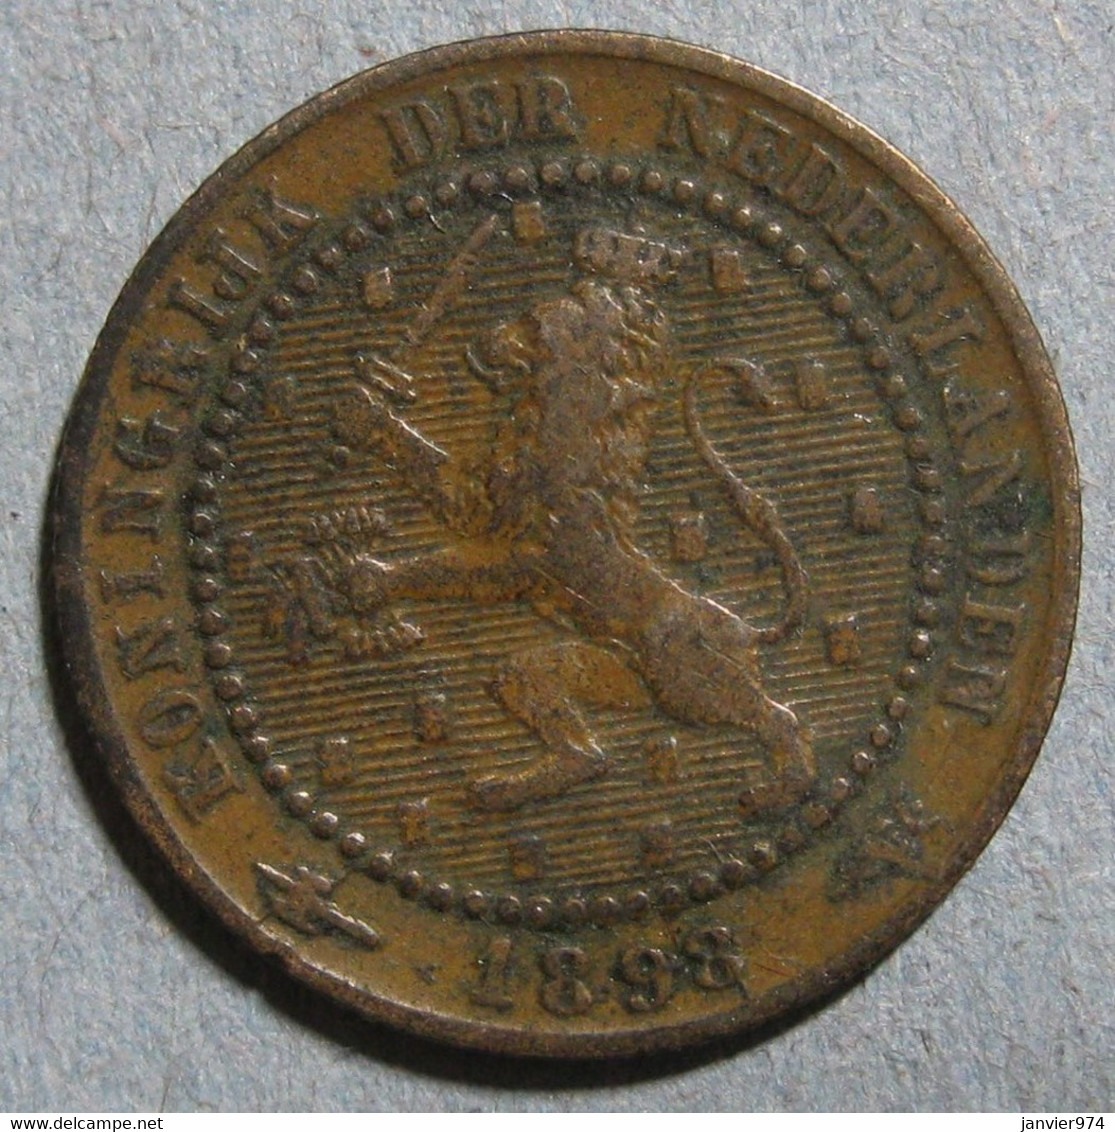 Pays-Bas, 2 1/2 Cents 1918, WILHELMINA I. Bronze. KM# 150 - 2.5 Centavos